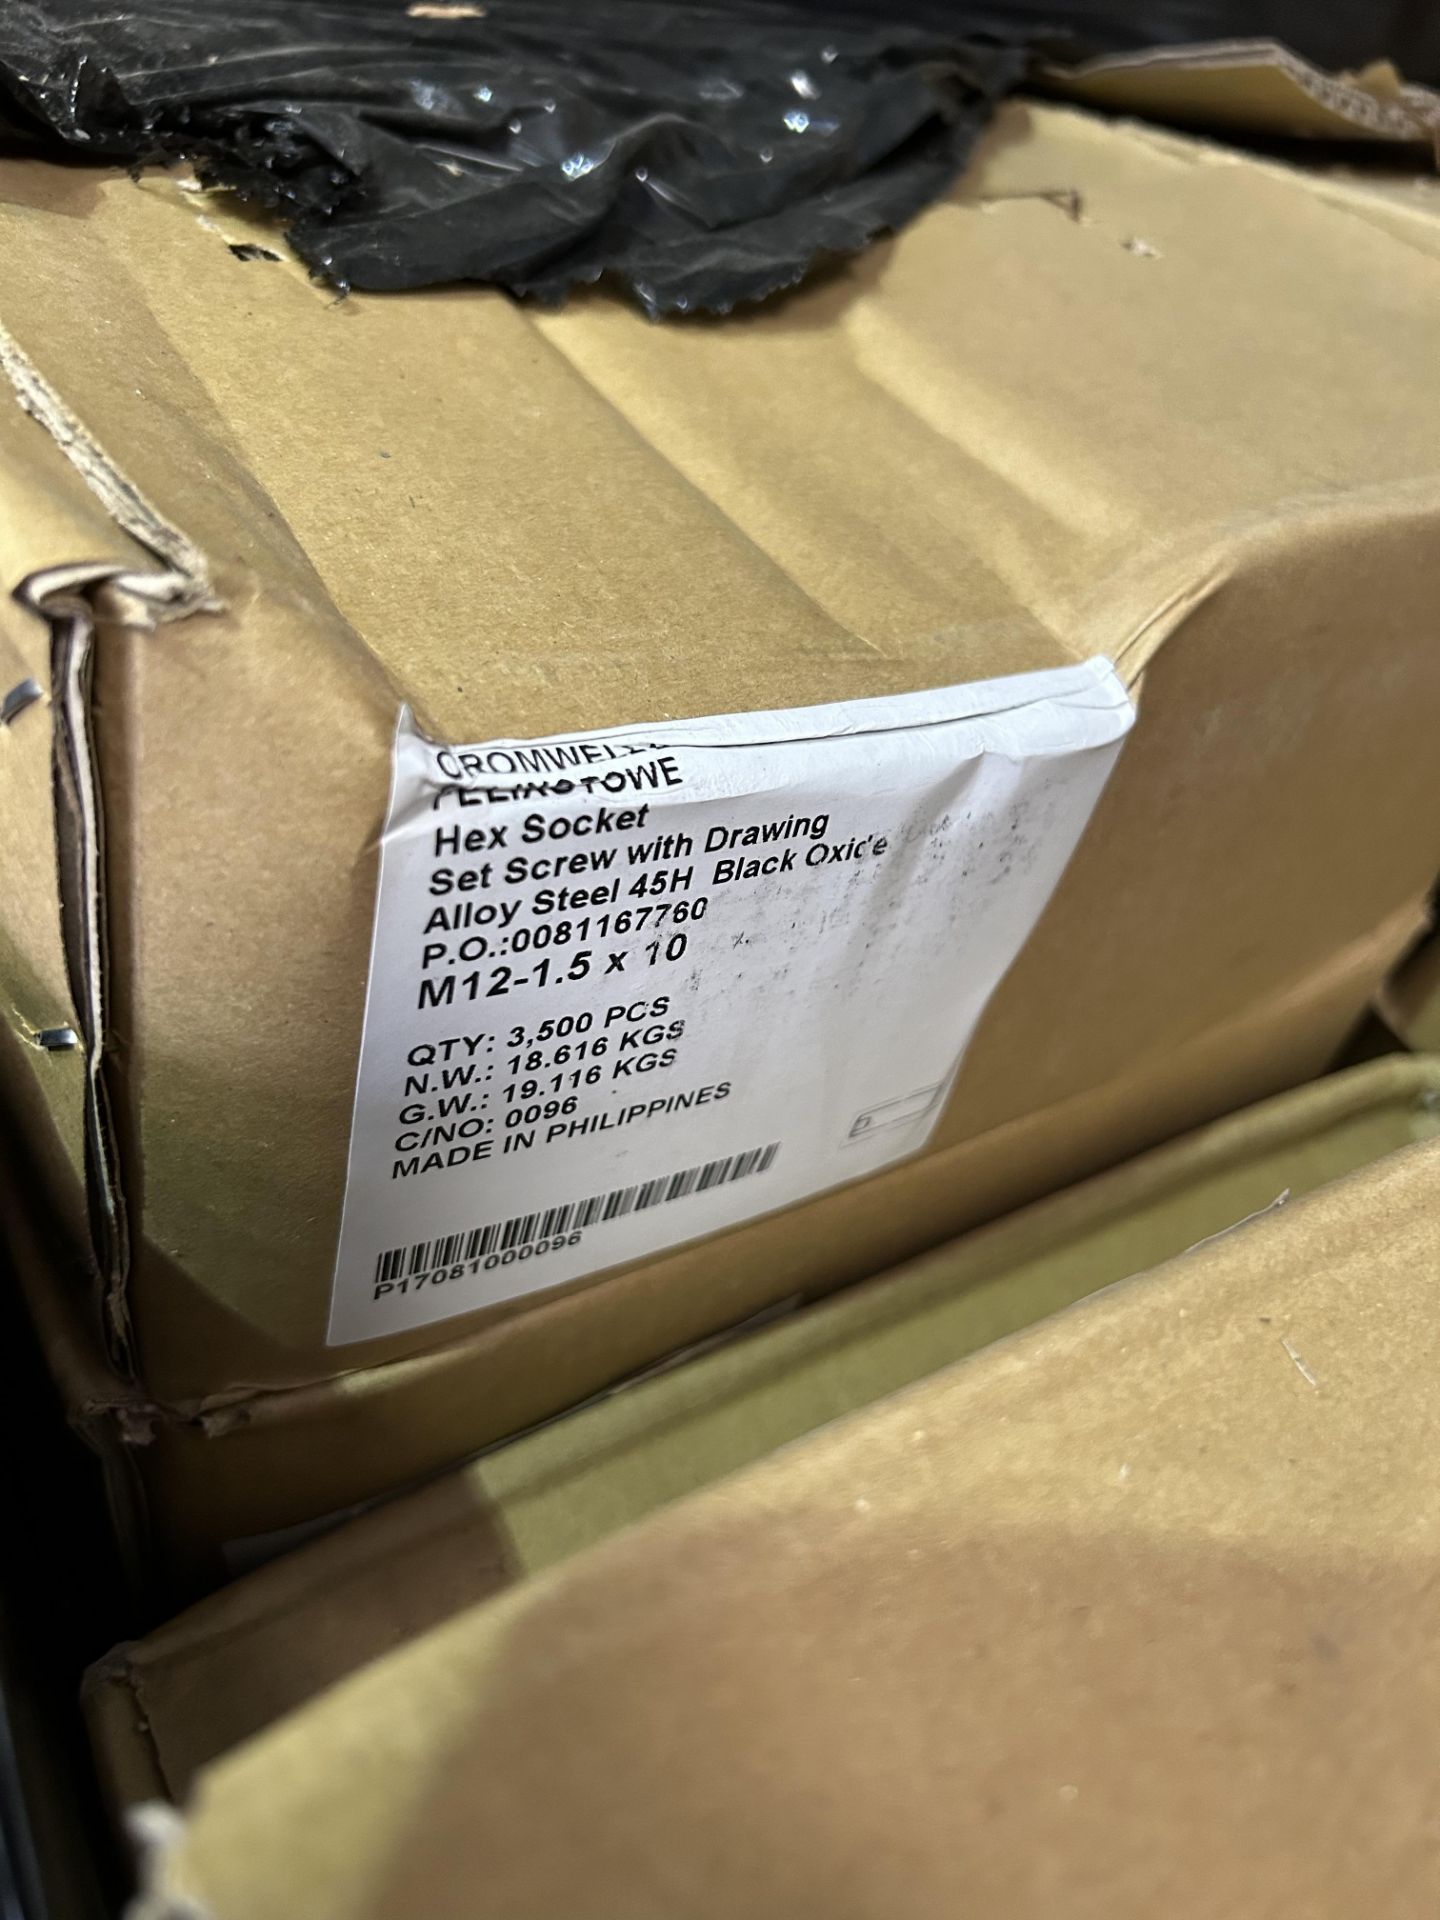 48 BOXES OF HEX SOCKET SET SCREW FASTENERS M12-1.5 x10mm (3500 PER BOX) RRP £12,386 - Image 3 of 3